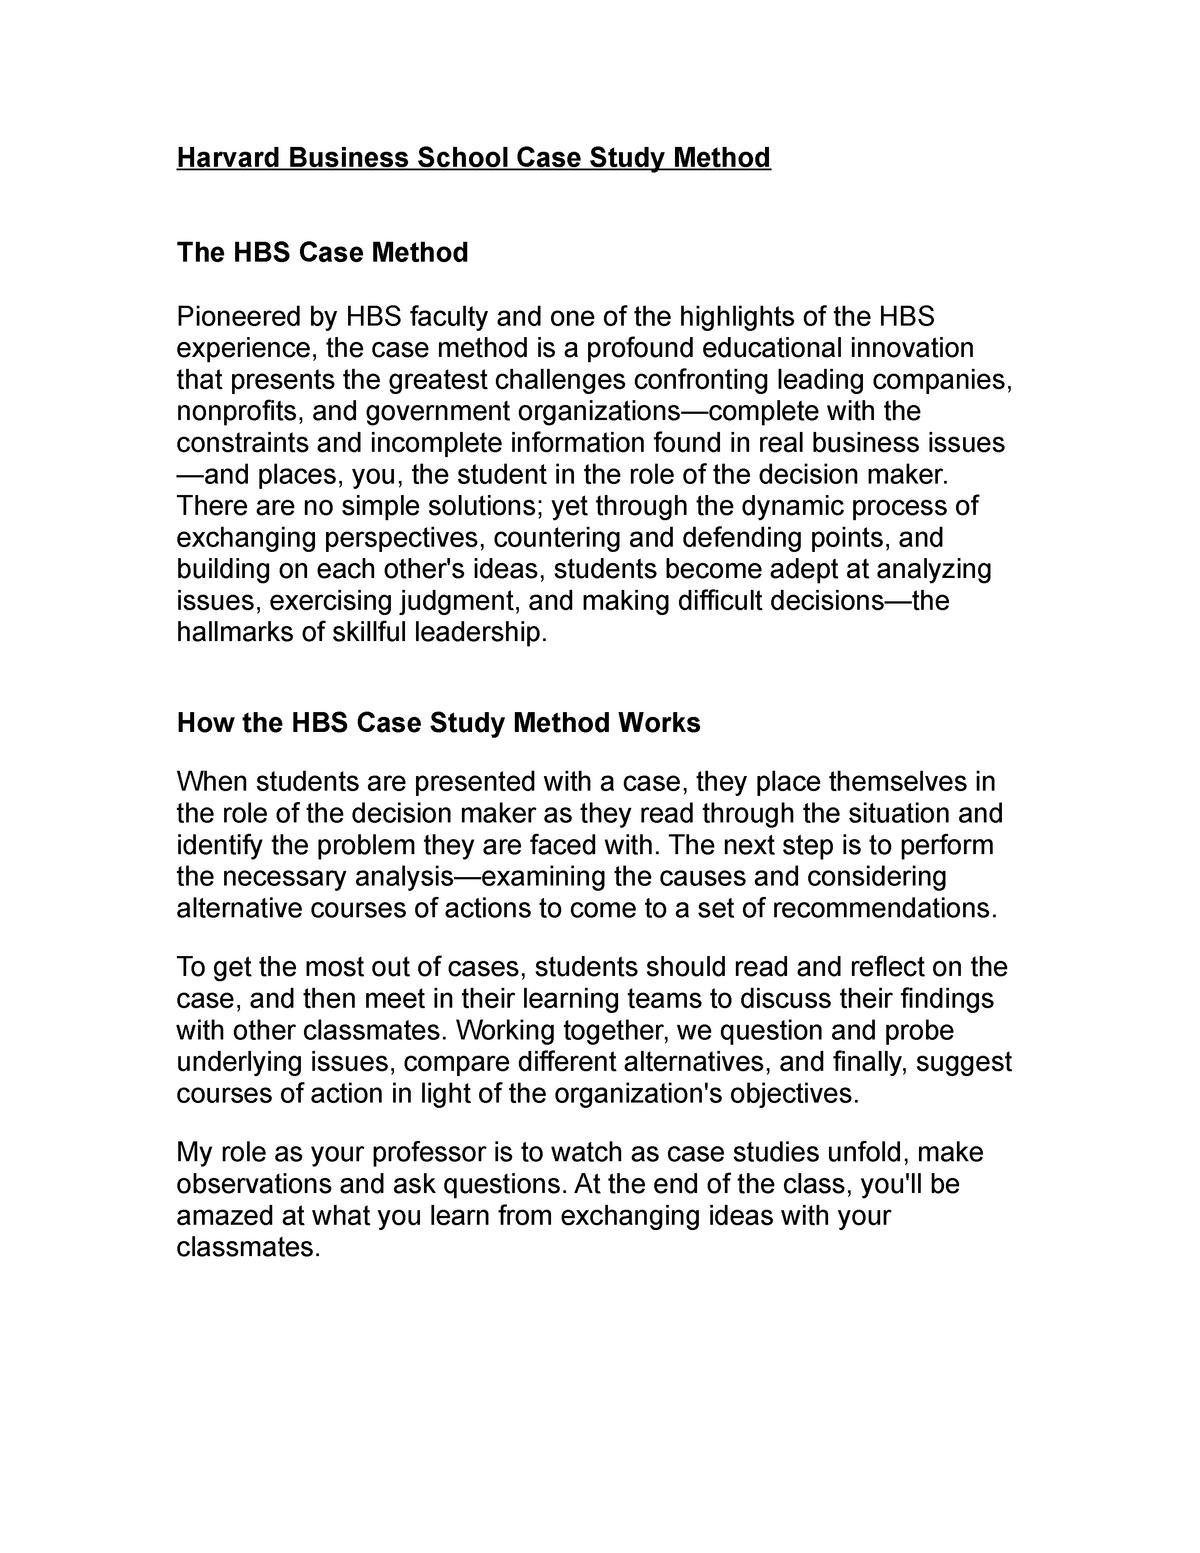 bts harvard case study pdf free download